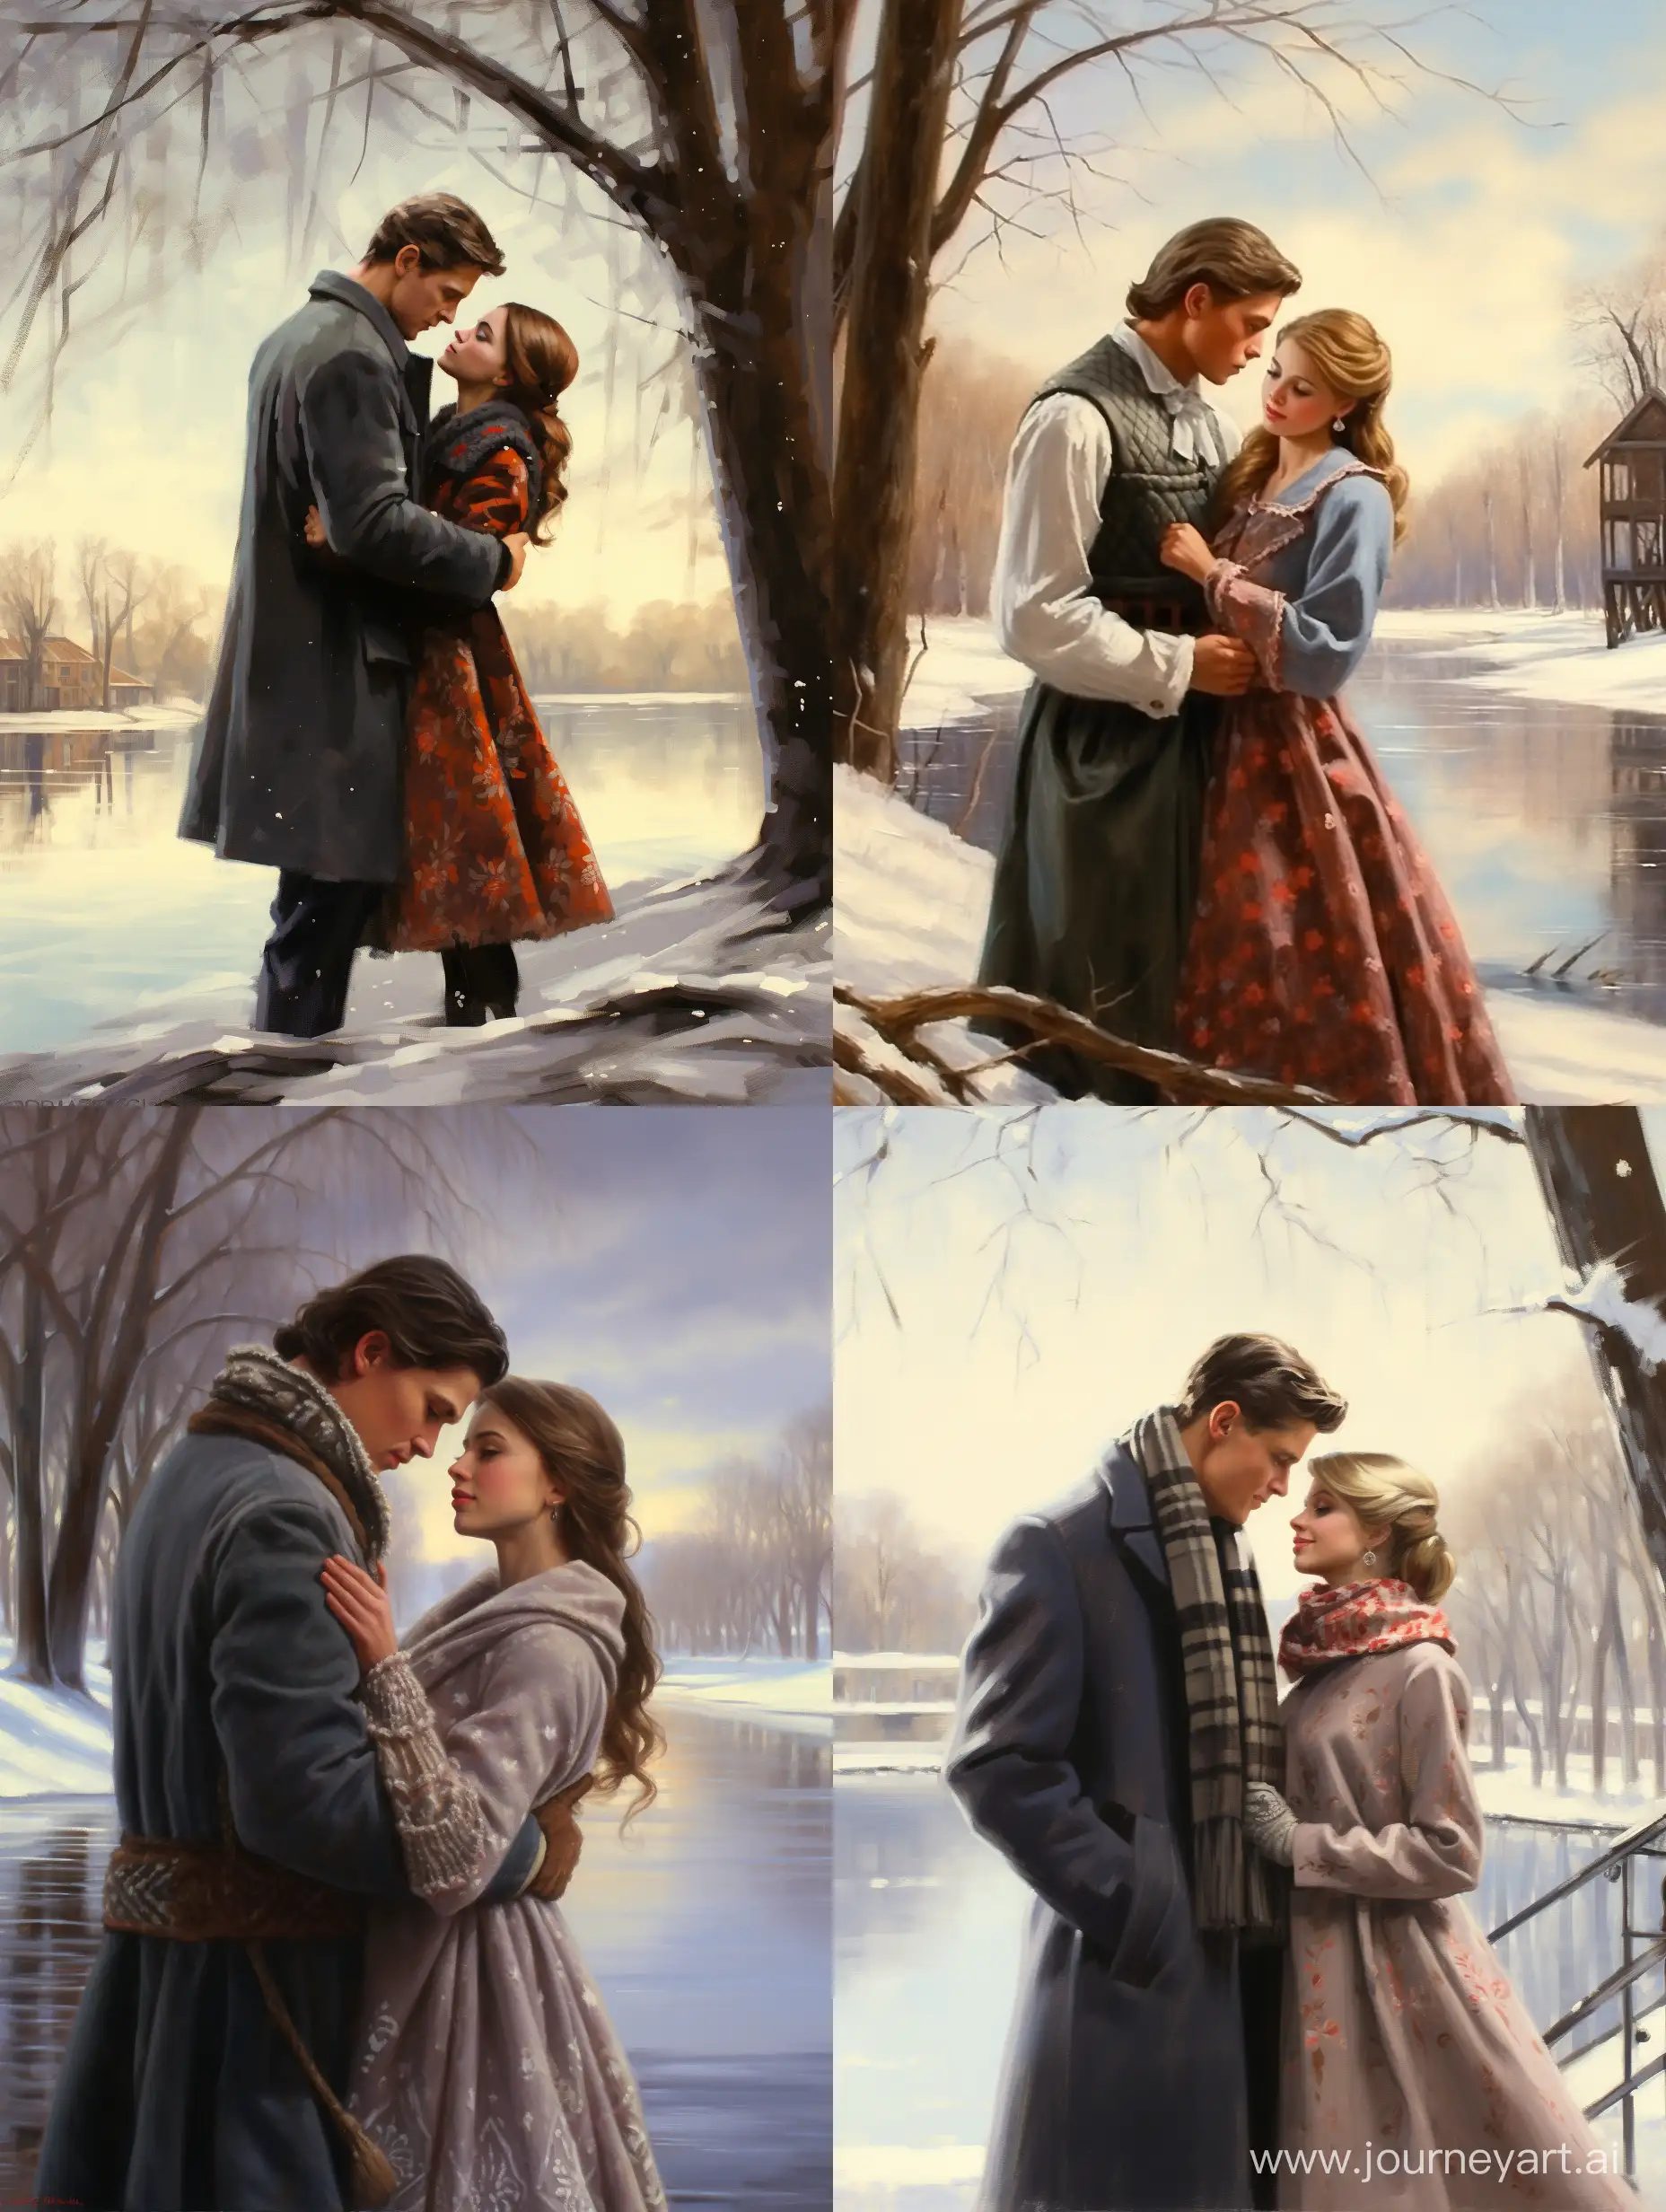 Romantic-Encounter-on-the-Winter-Riverbank-Beautiful-European-Couple-in-a-34-Aspect-Ratio